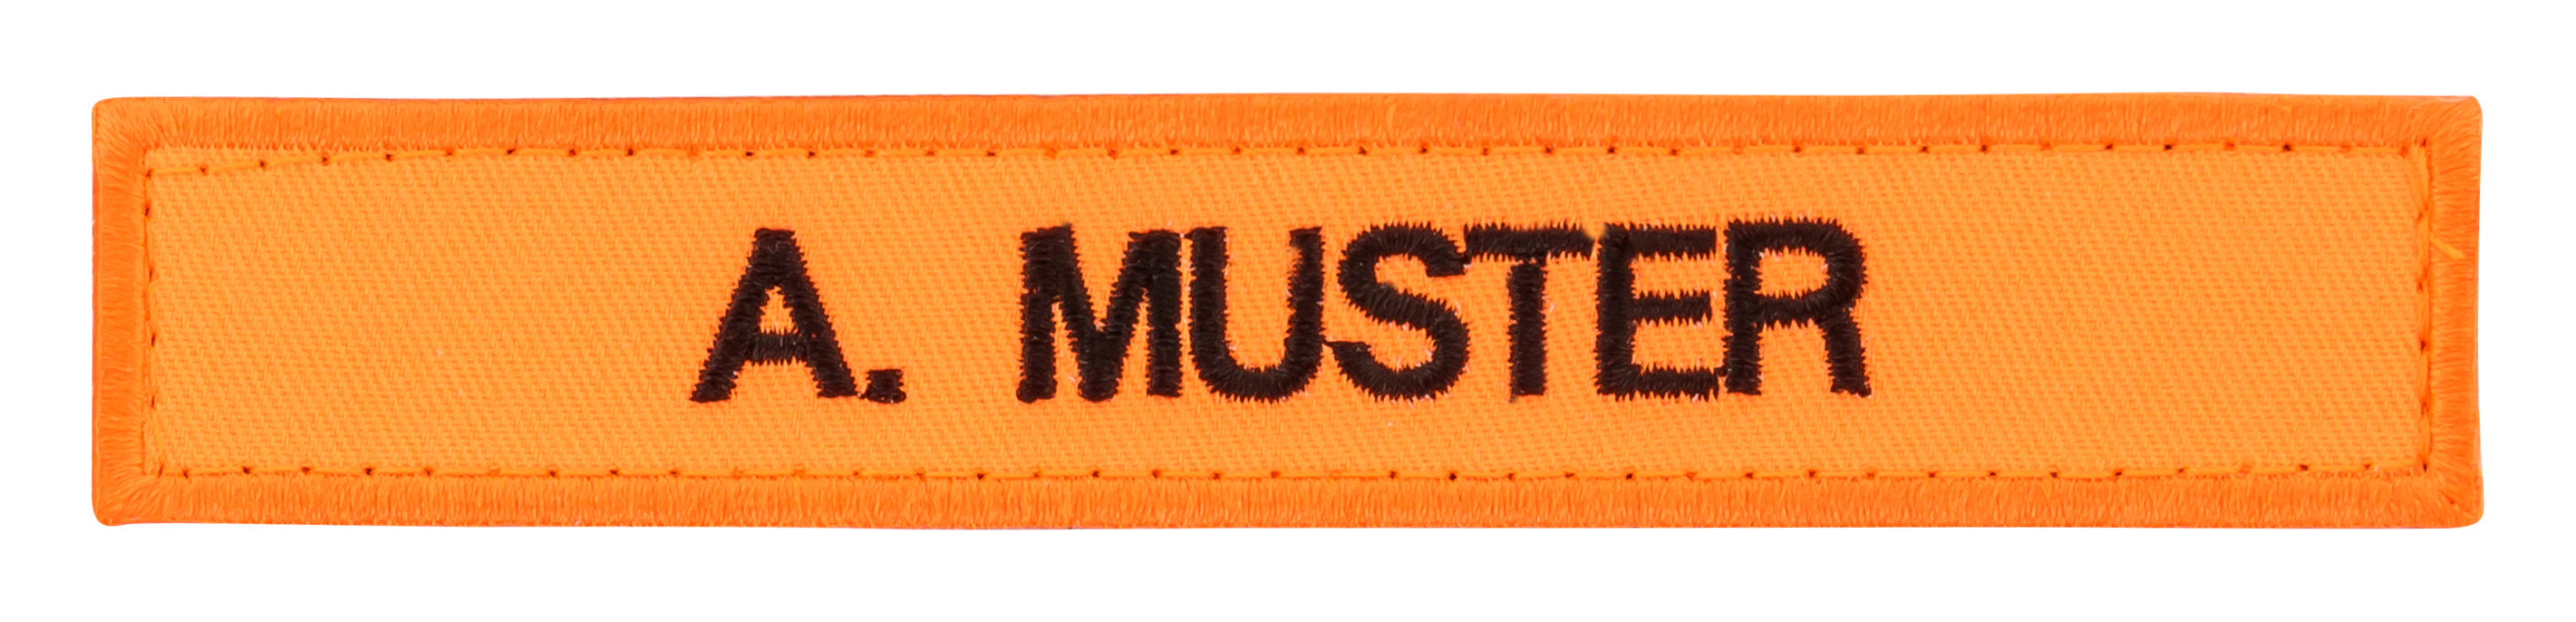 PACOTEX Namensschild aus Stoff, bestickt,110x25mm, orange, Wunschtext, mit Kletthaken benäht